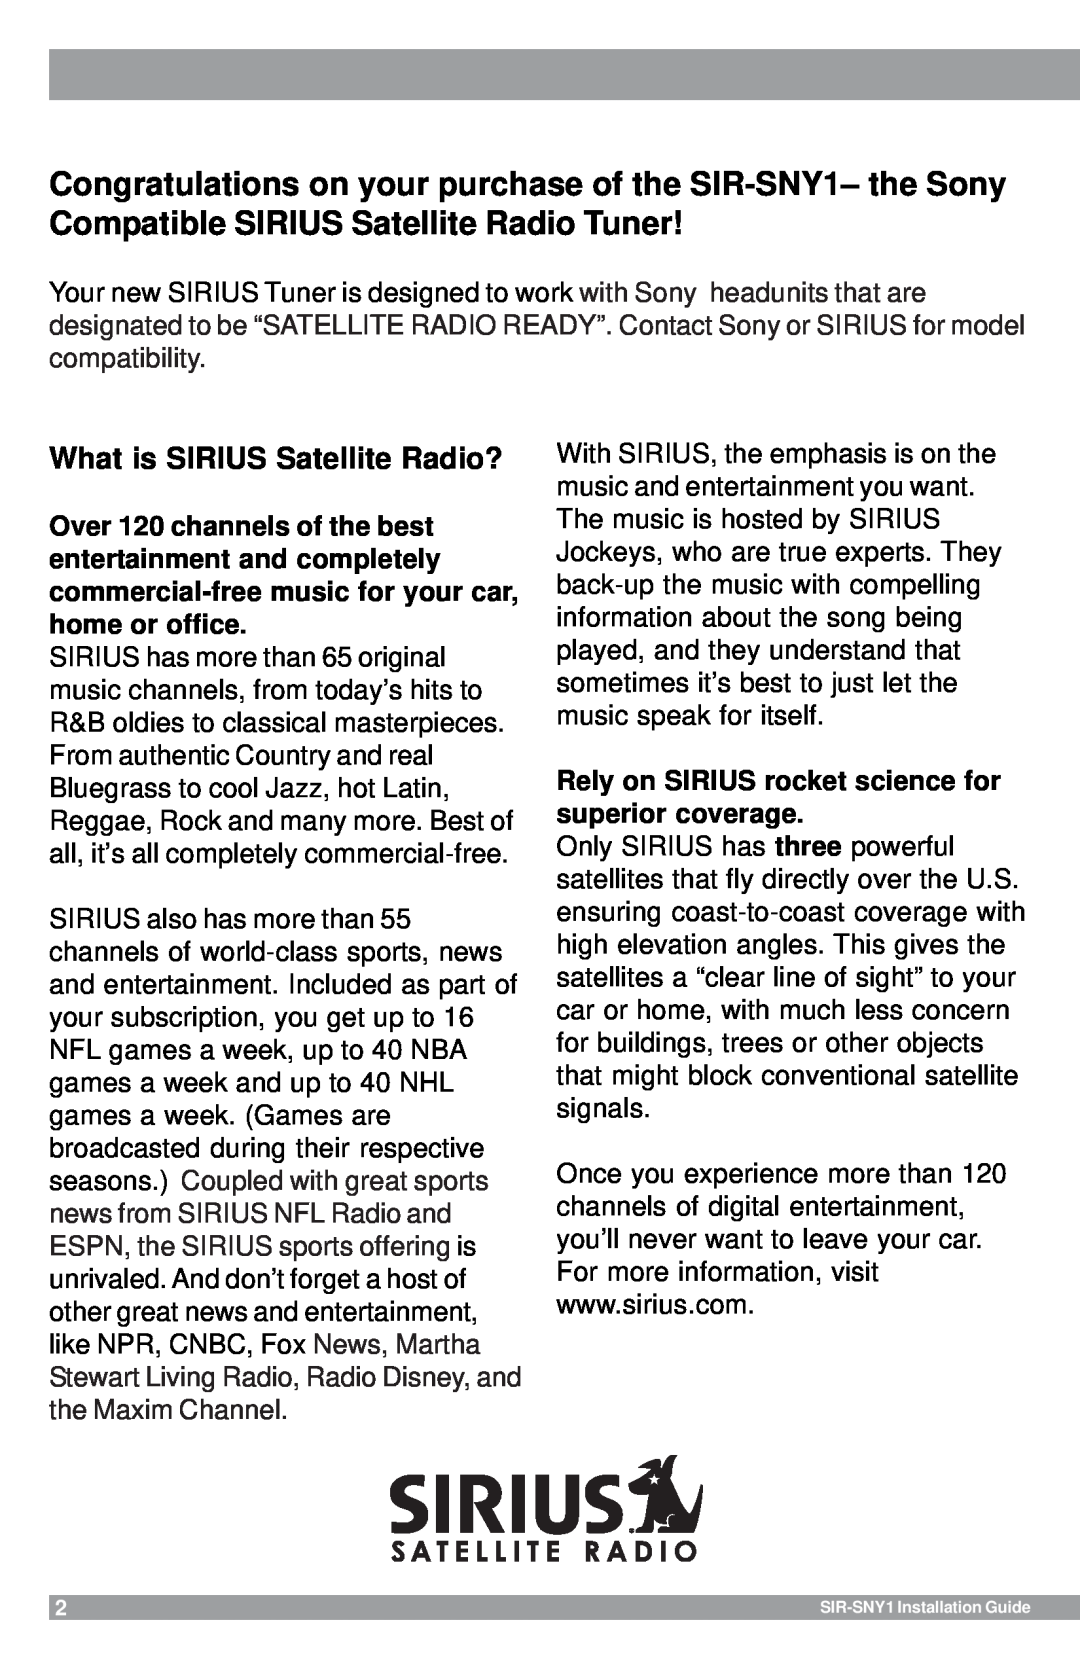 Sirius Satellite Radio manual What is SIRIUS Satellite Radio?, SIR-SNY1Installation Guide 